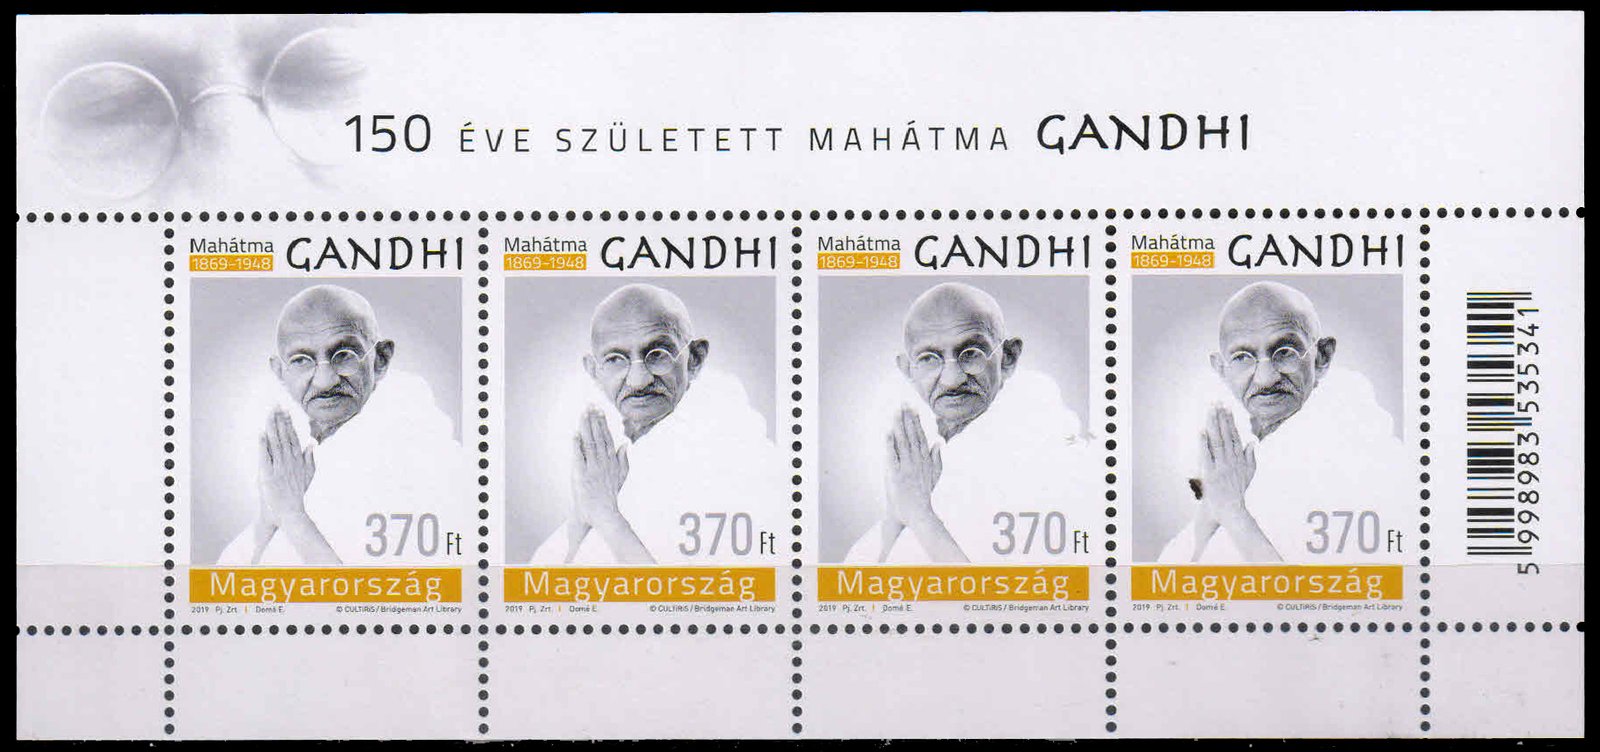 HUNGARY 2019-Mahatma Gandhi, 150th Birth Anniversary-Miniature Sheet of 4 Stamps, MNH